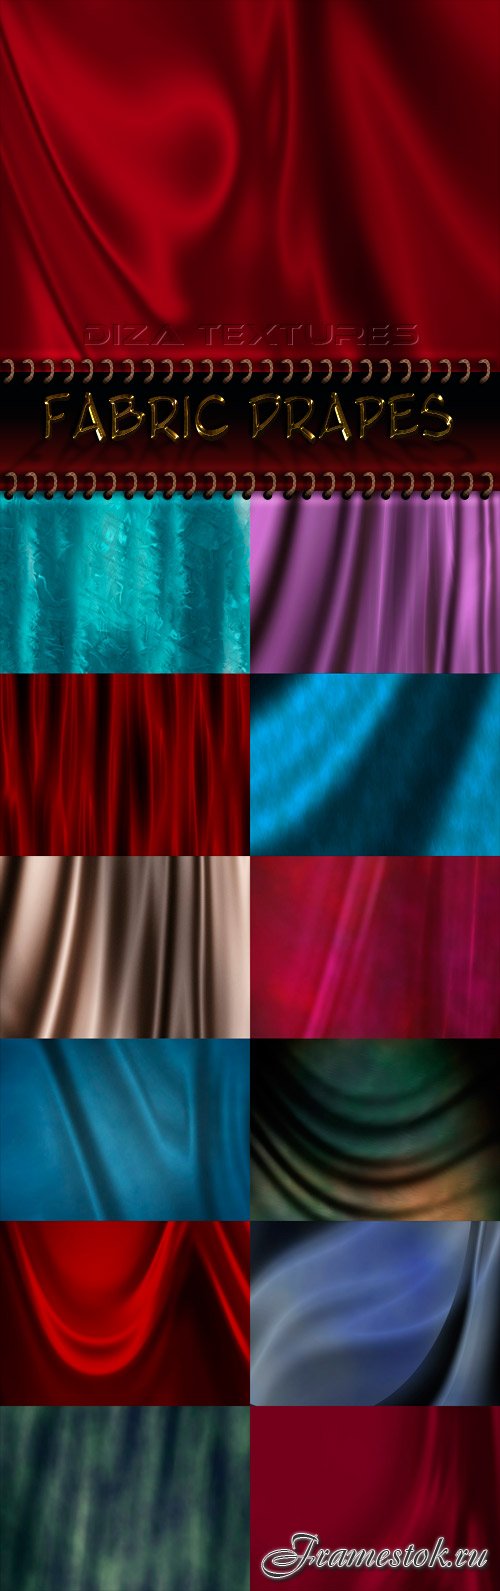 Fabric drapes textures 